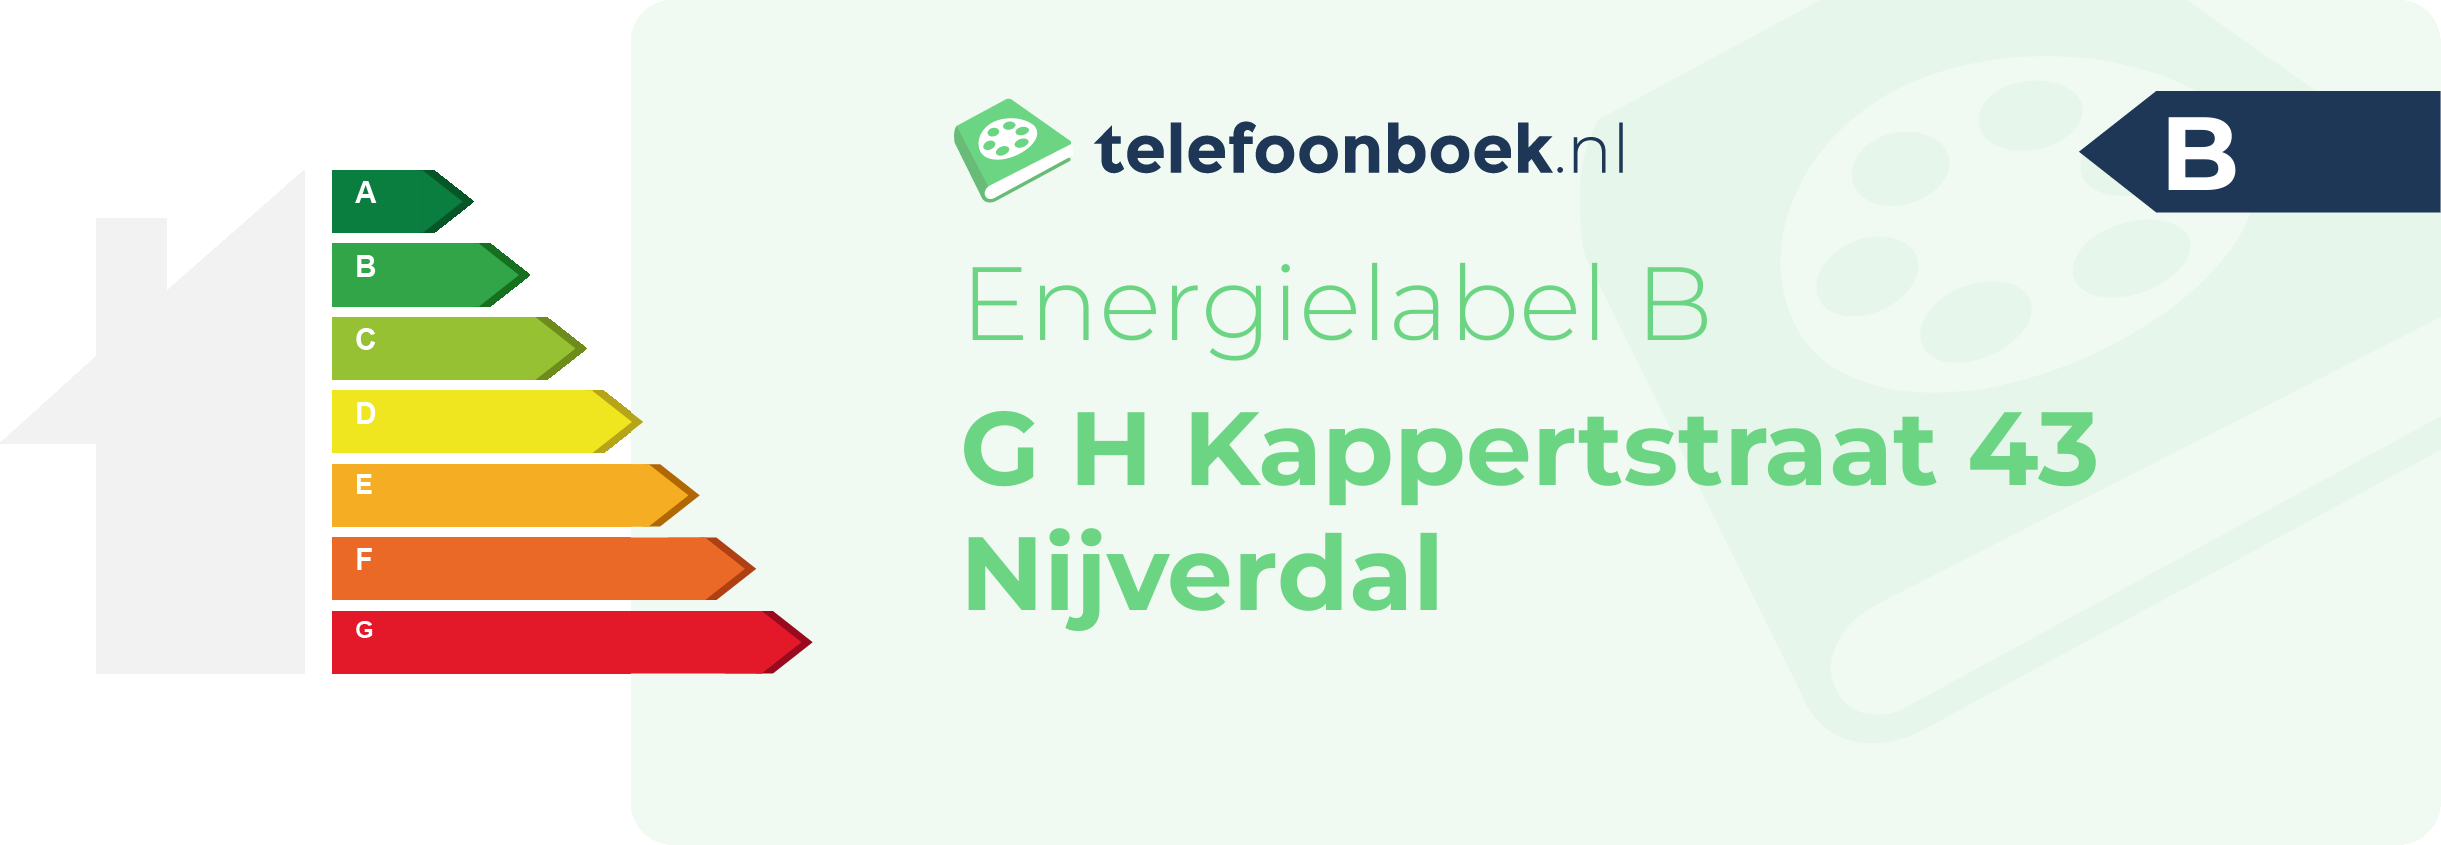 Energielabel G H Kappertstraat 43 Nijverdal